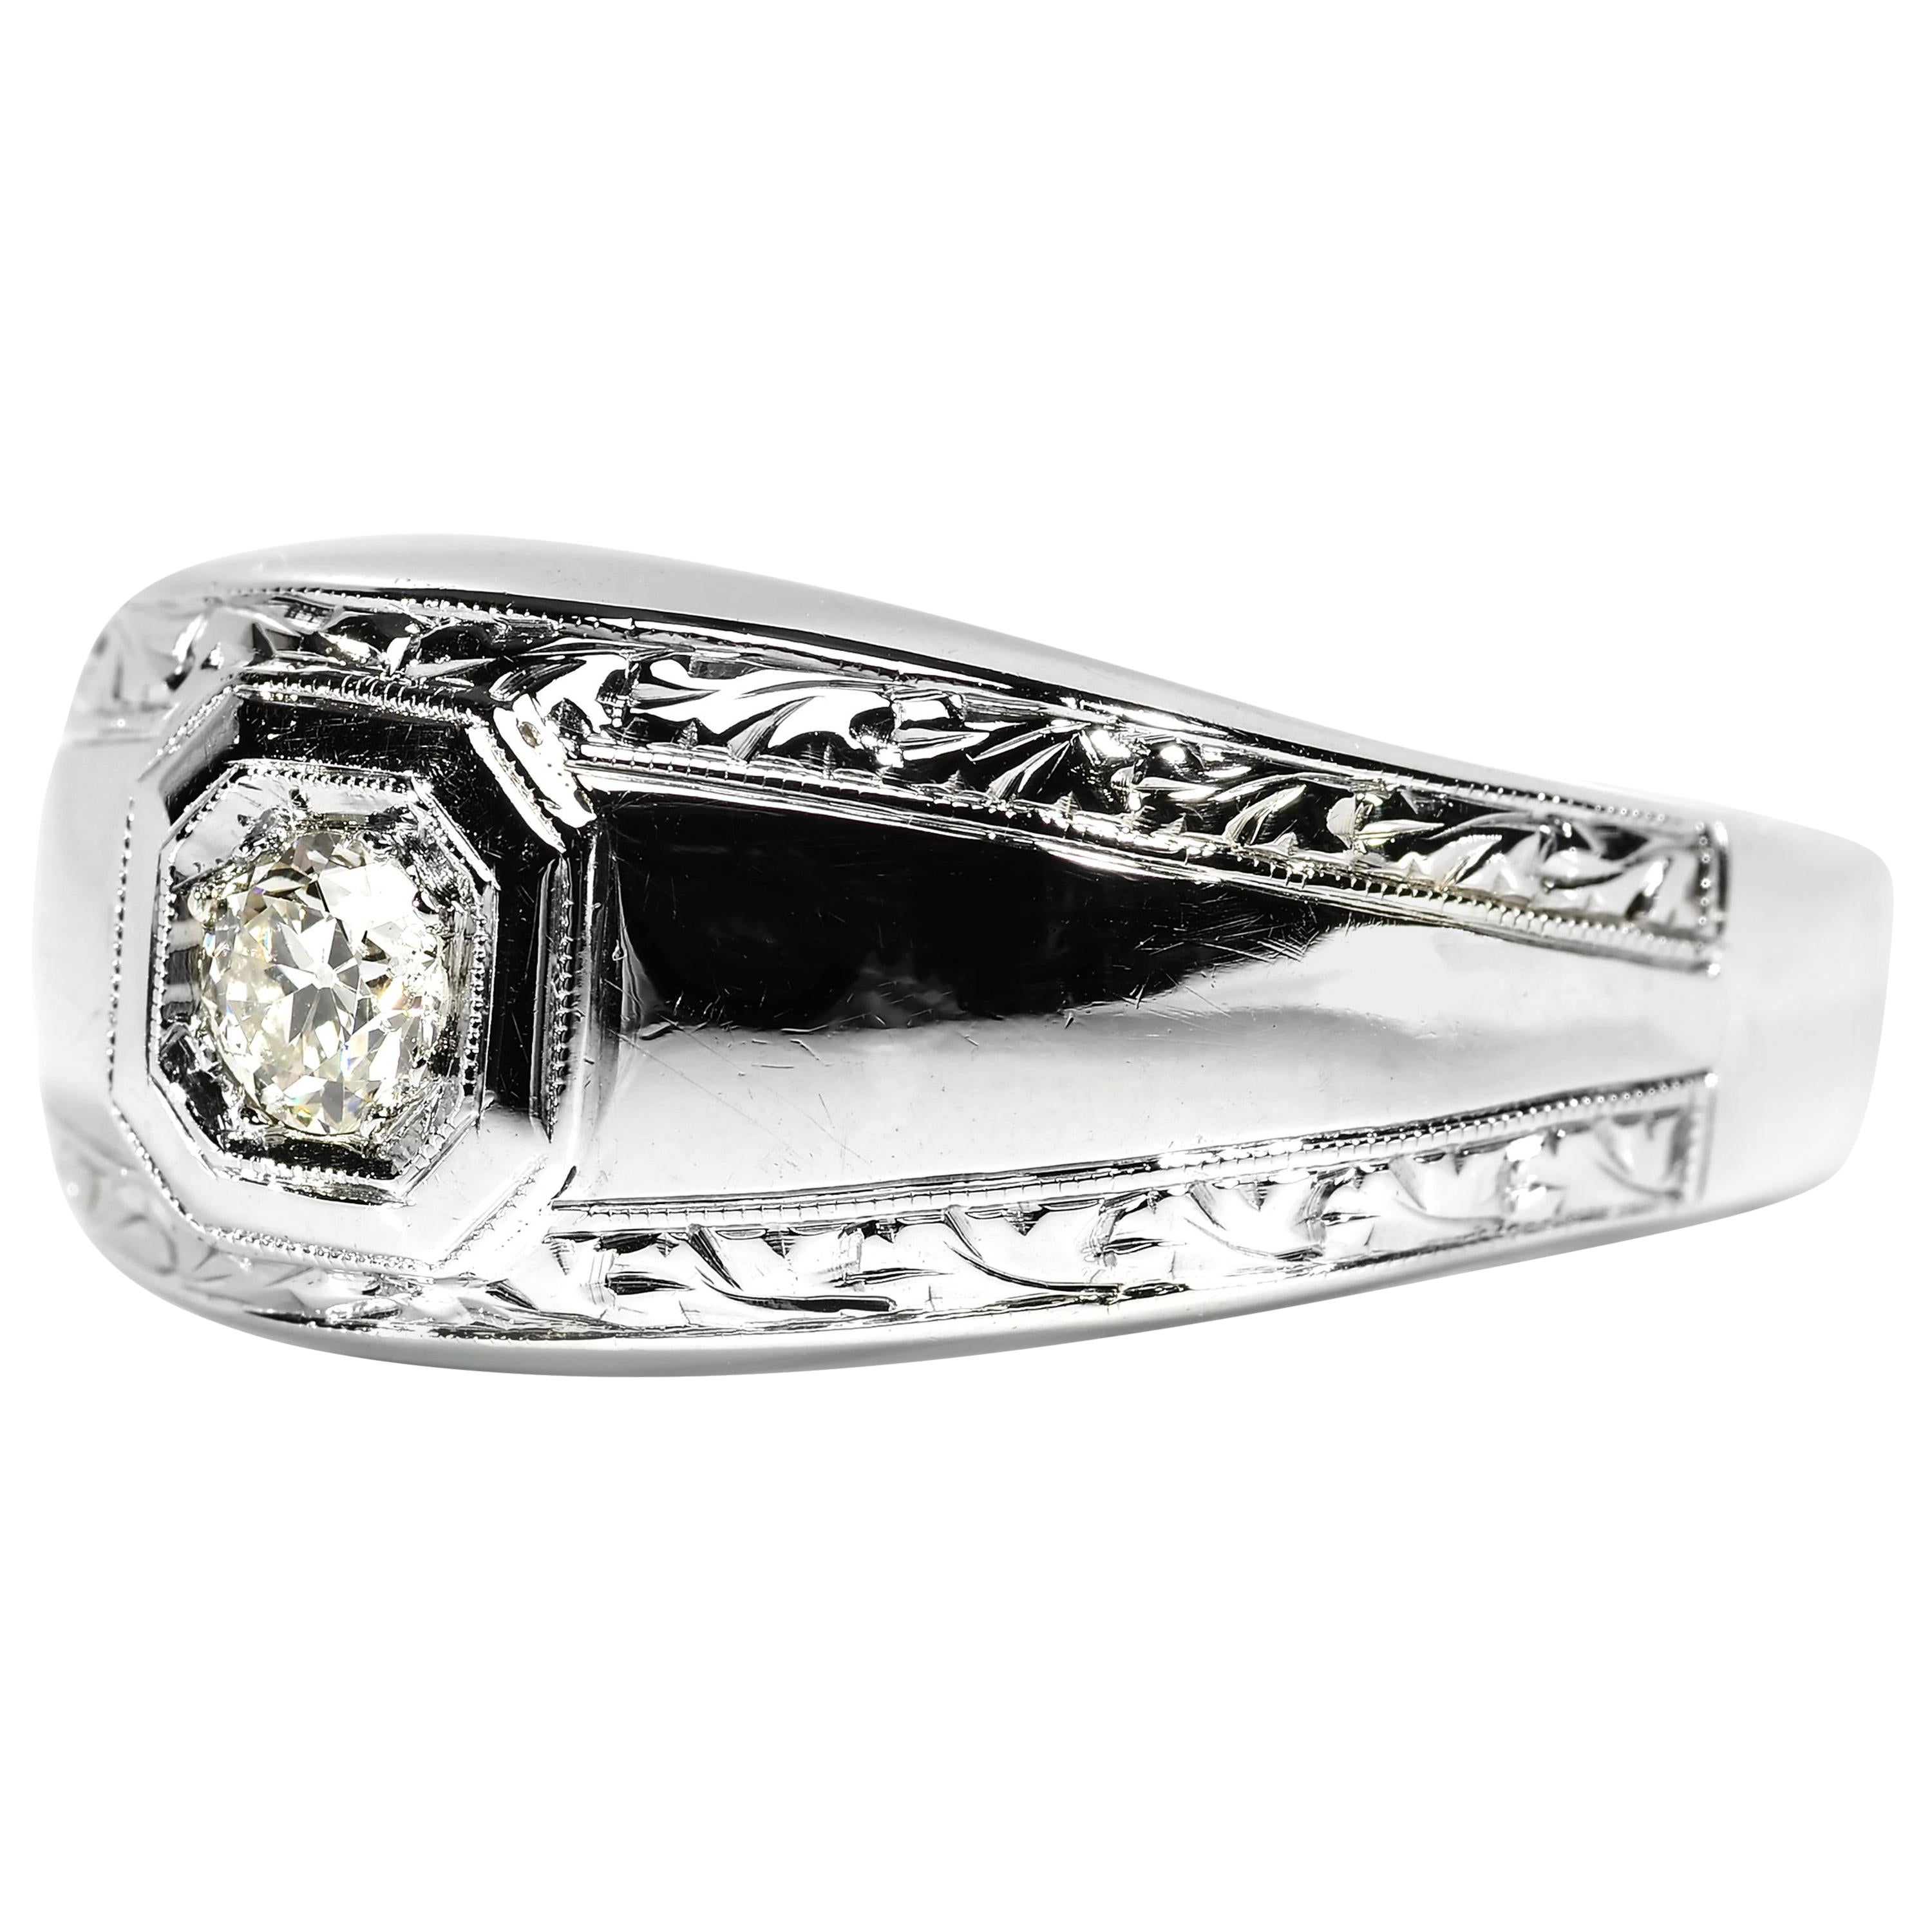 Men's Diamond Ring Understated Art Deco Elegance